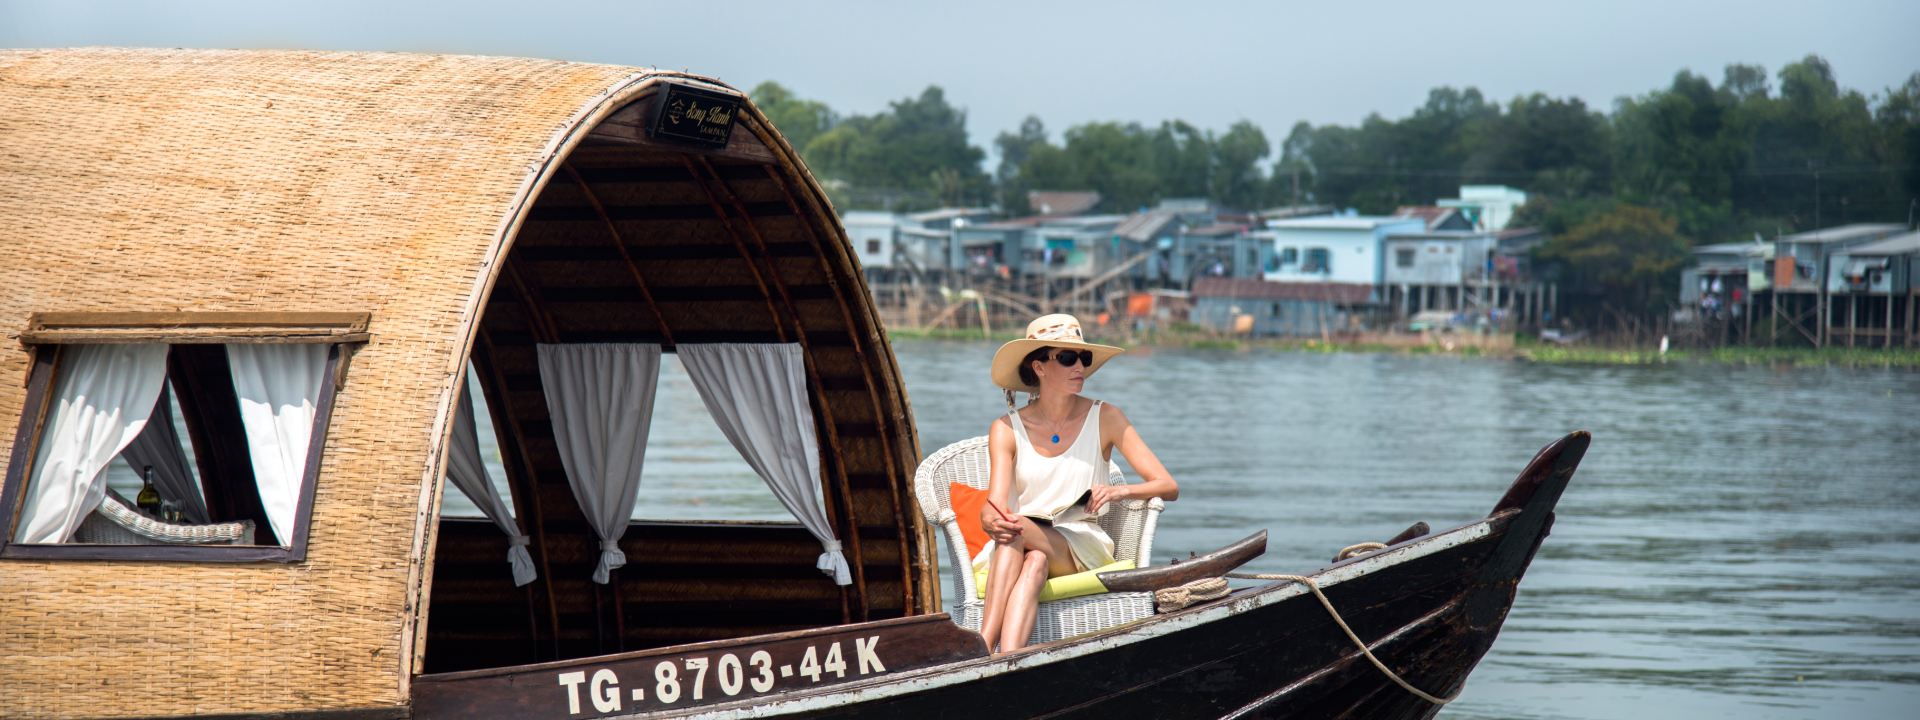 Mekong Eyes Cruise on Mekong River 2 Days